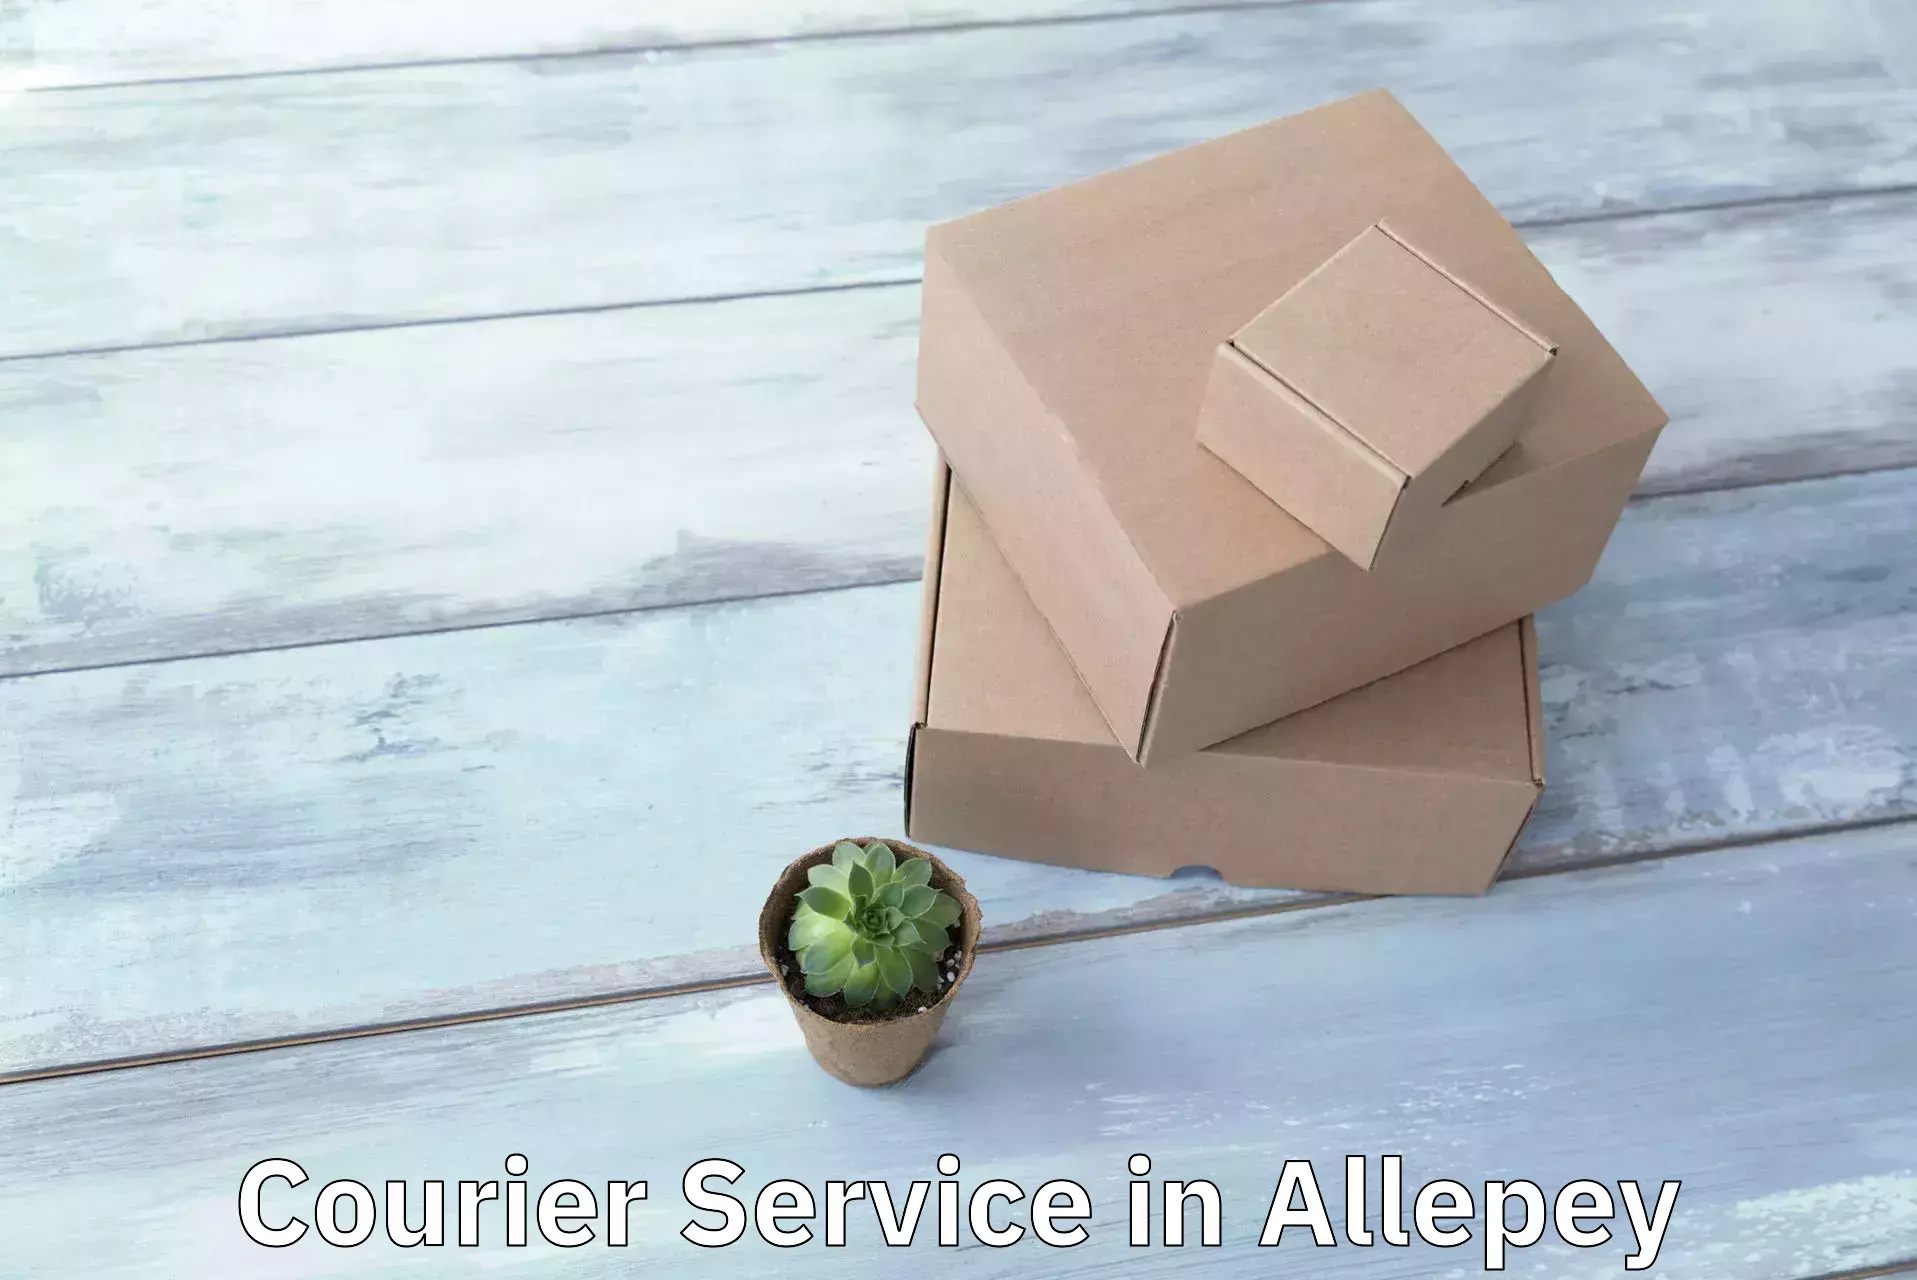 Efficient order fulfillment in Allepey